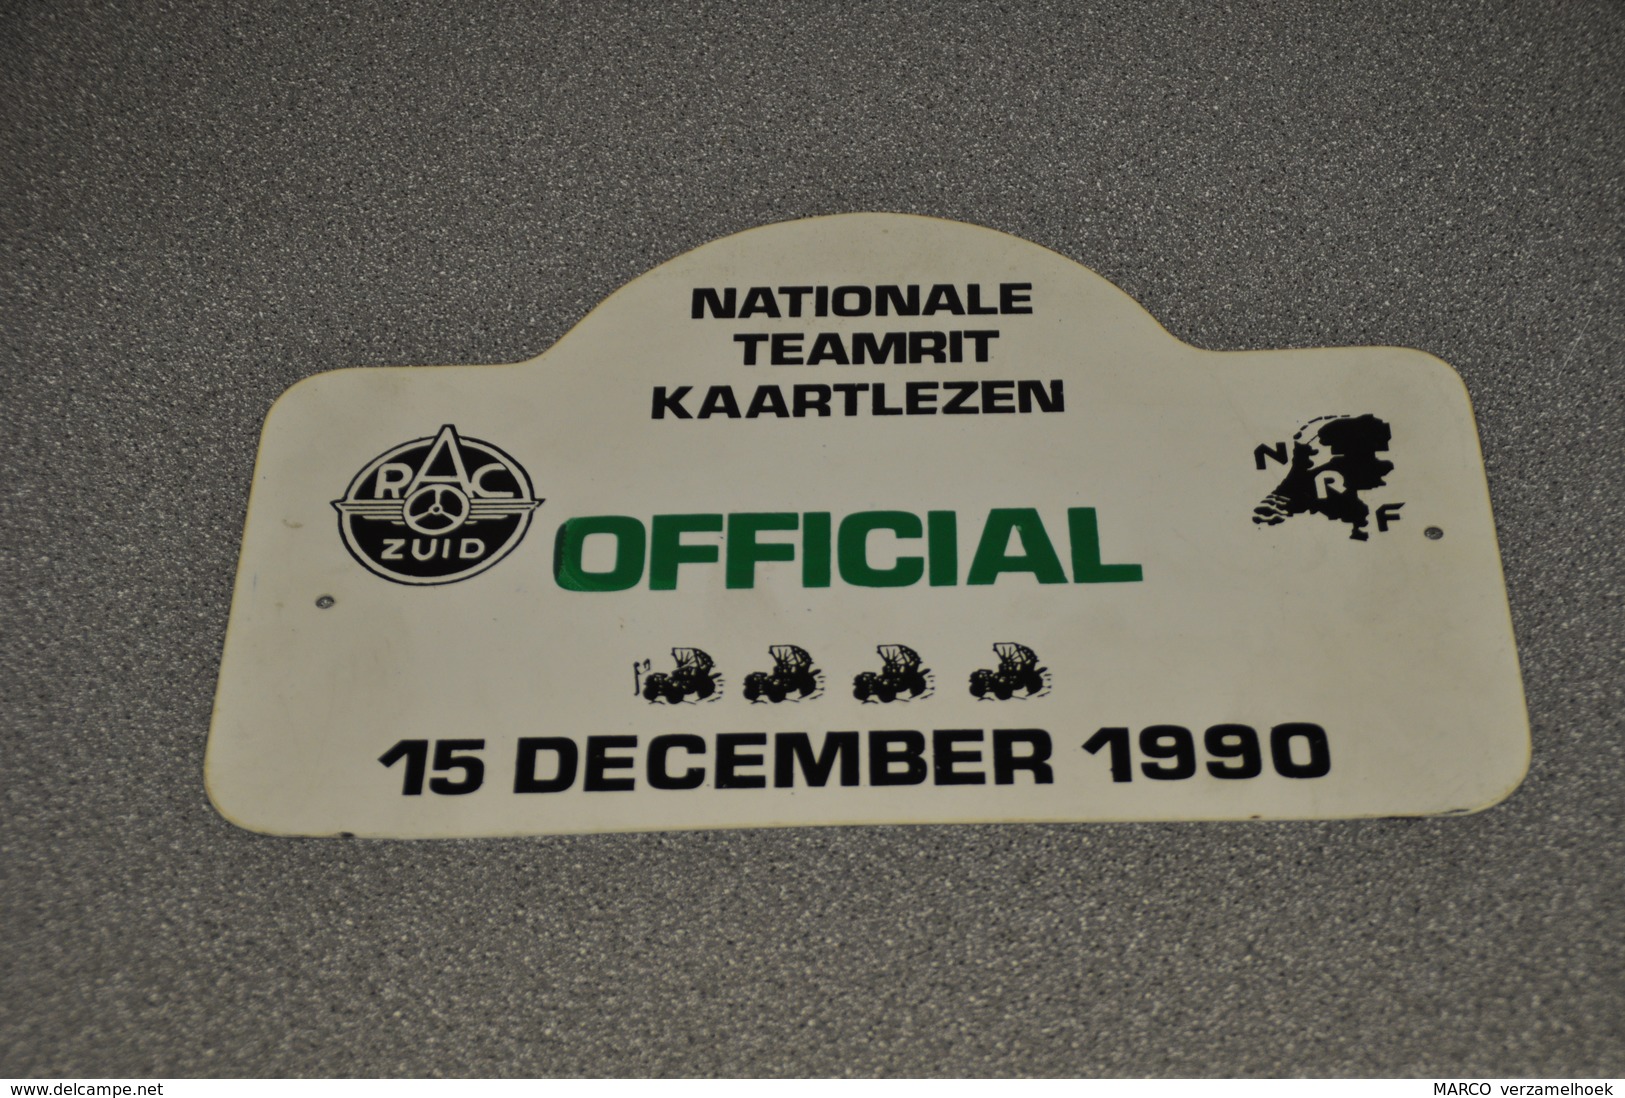 Rally Plaat-rallye Plaque Plastic: Nationale Teamrit Kaartlezen 1990 OFFICIAL RAC-zuid NRF - Rallyeschilder